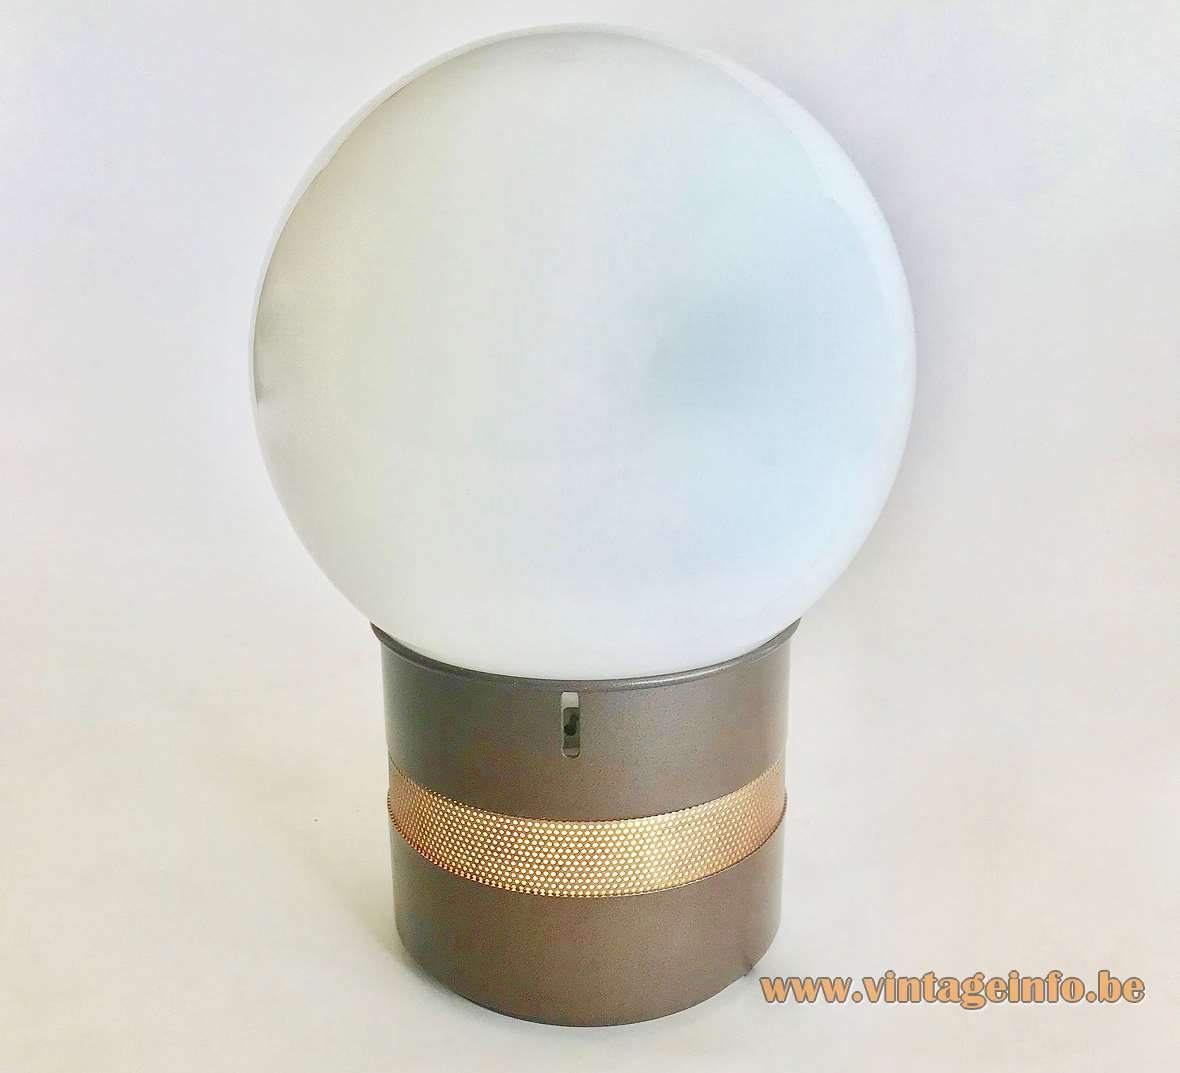 Gae Aulenti Mezzoracolo table or floor lamp 1973 design brown metal base opal glass globe 1970s Artemide 